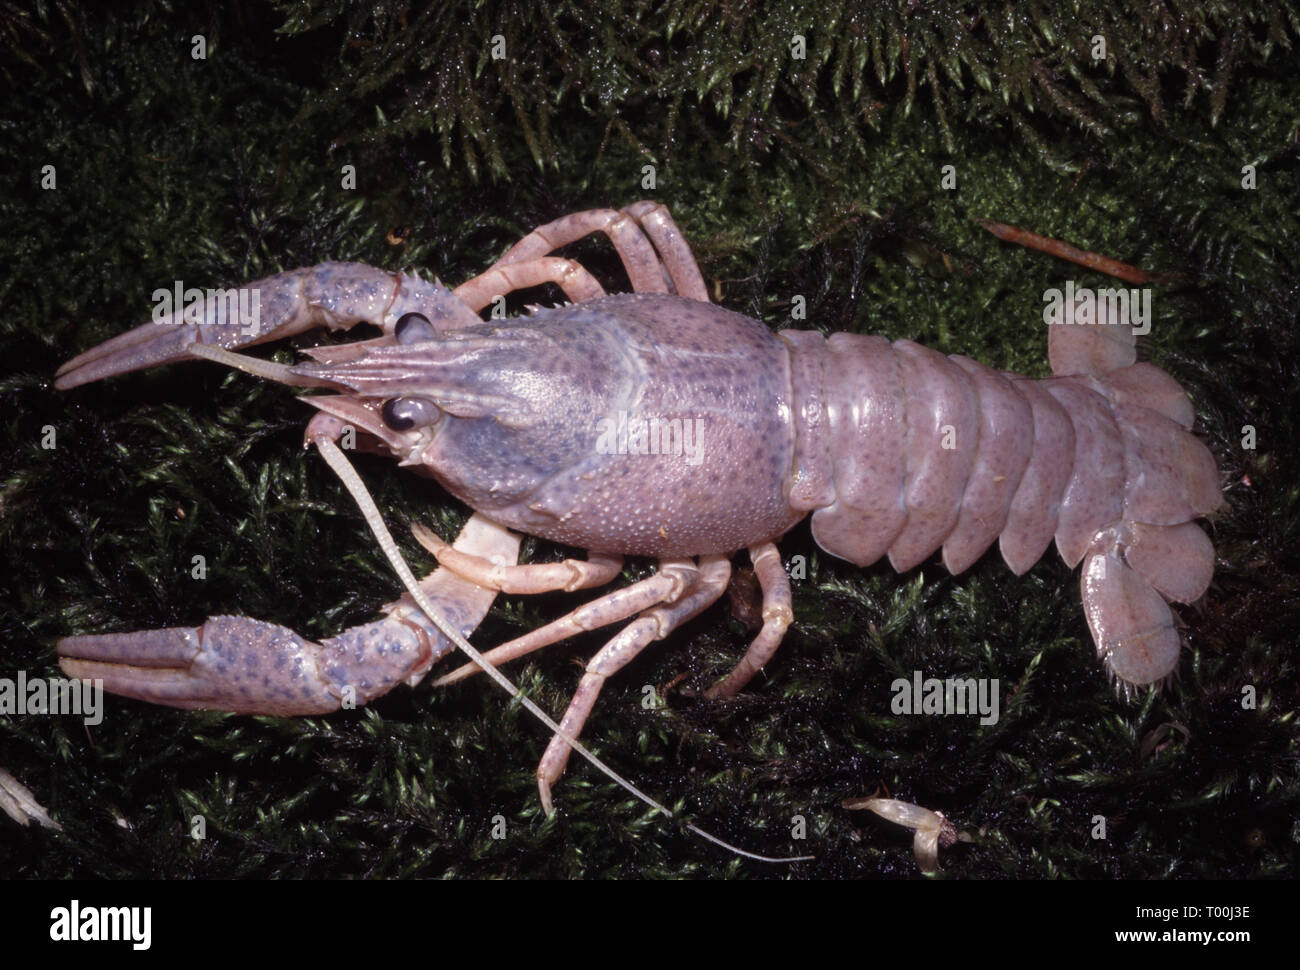 Turkish or narrow-clawed crayfish (Astacus leptodactylus), blue morph Stock Photo